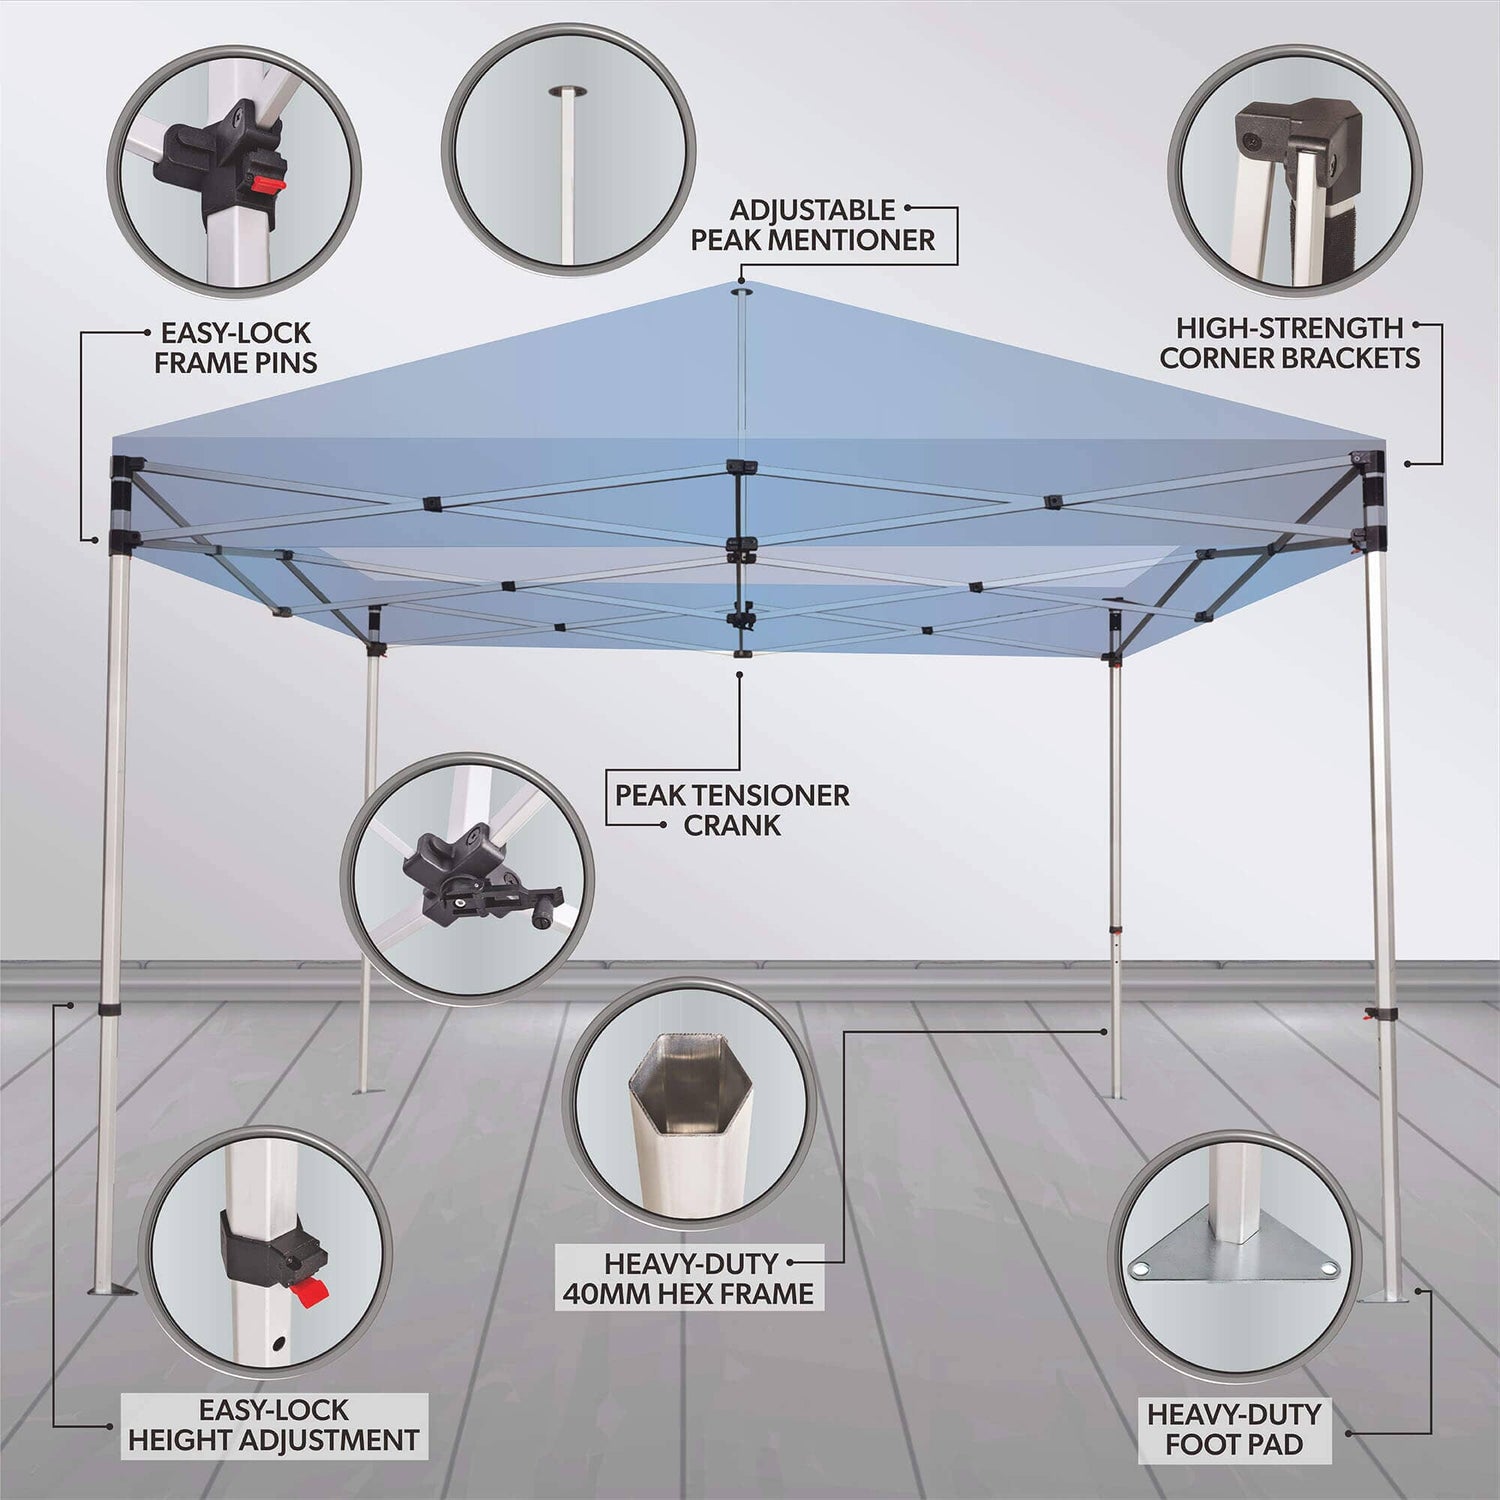 Custom Canopy Tent 